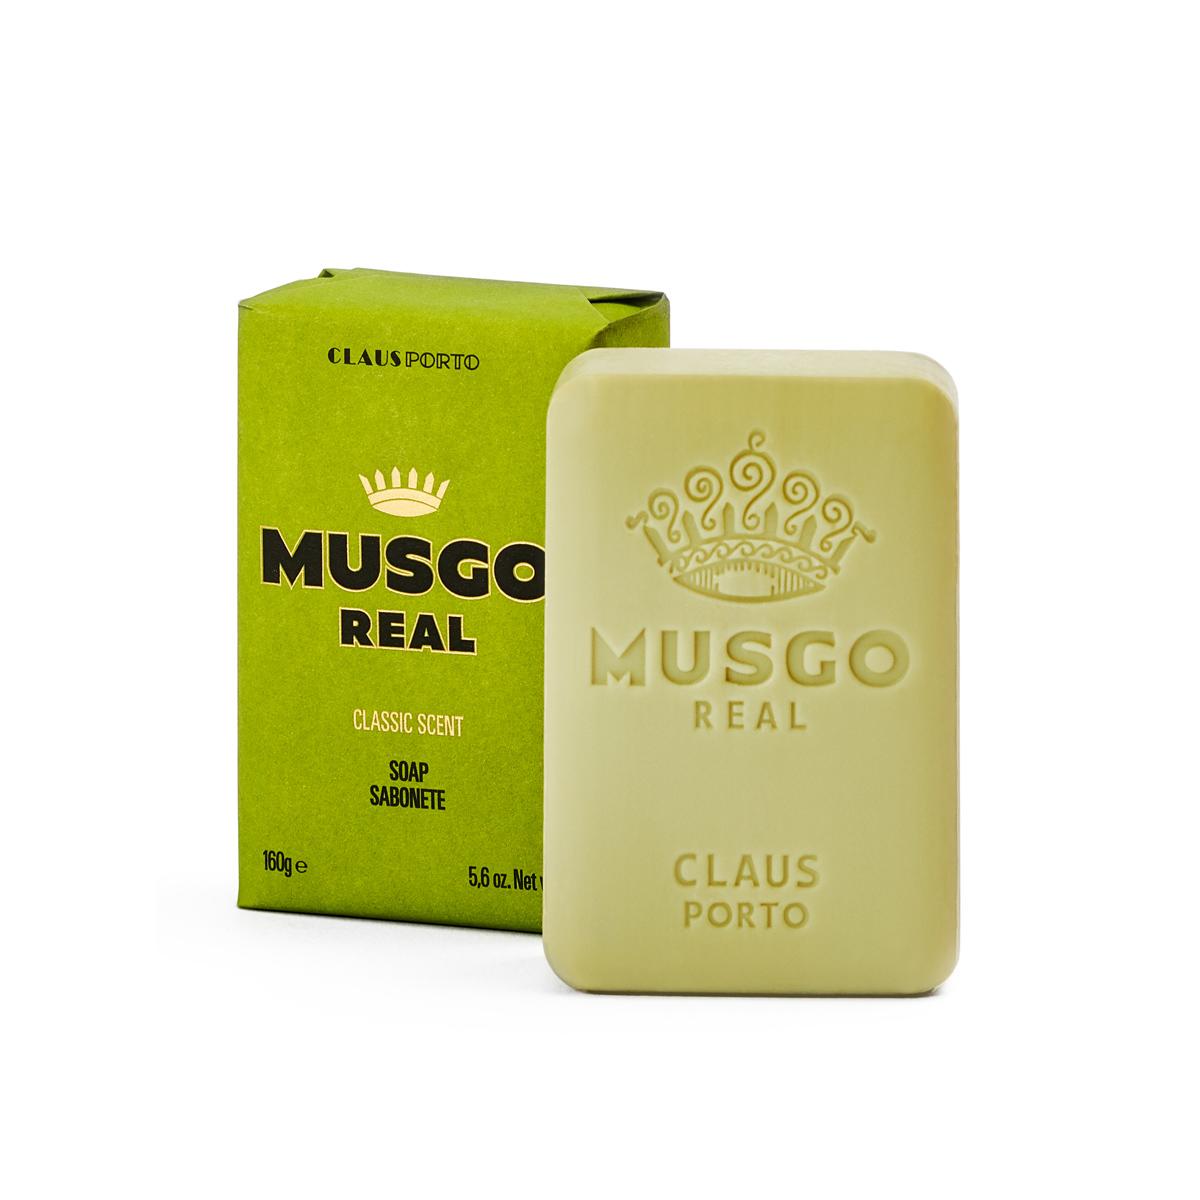 Musgo Real Men's Body Soap Classic Scent 160g